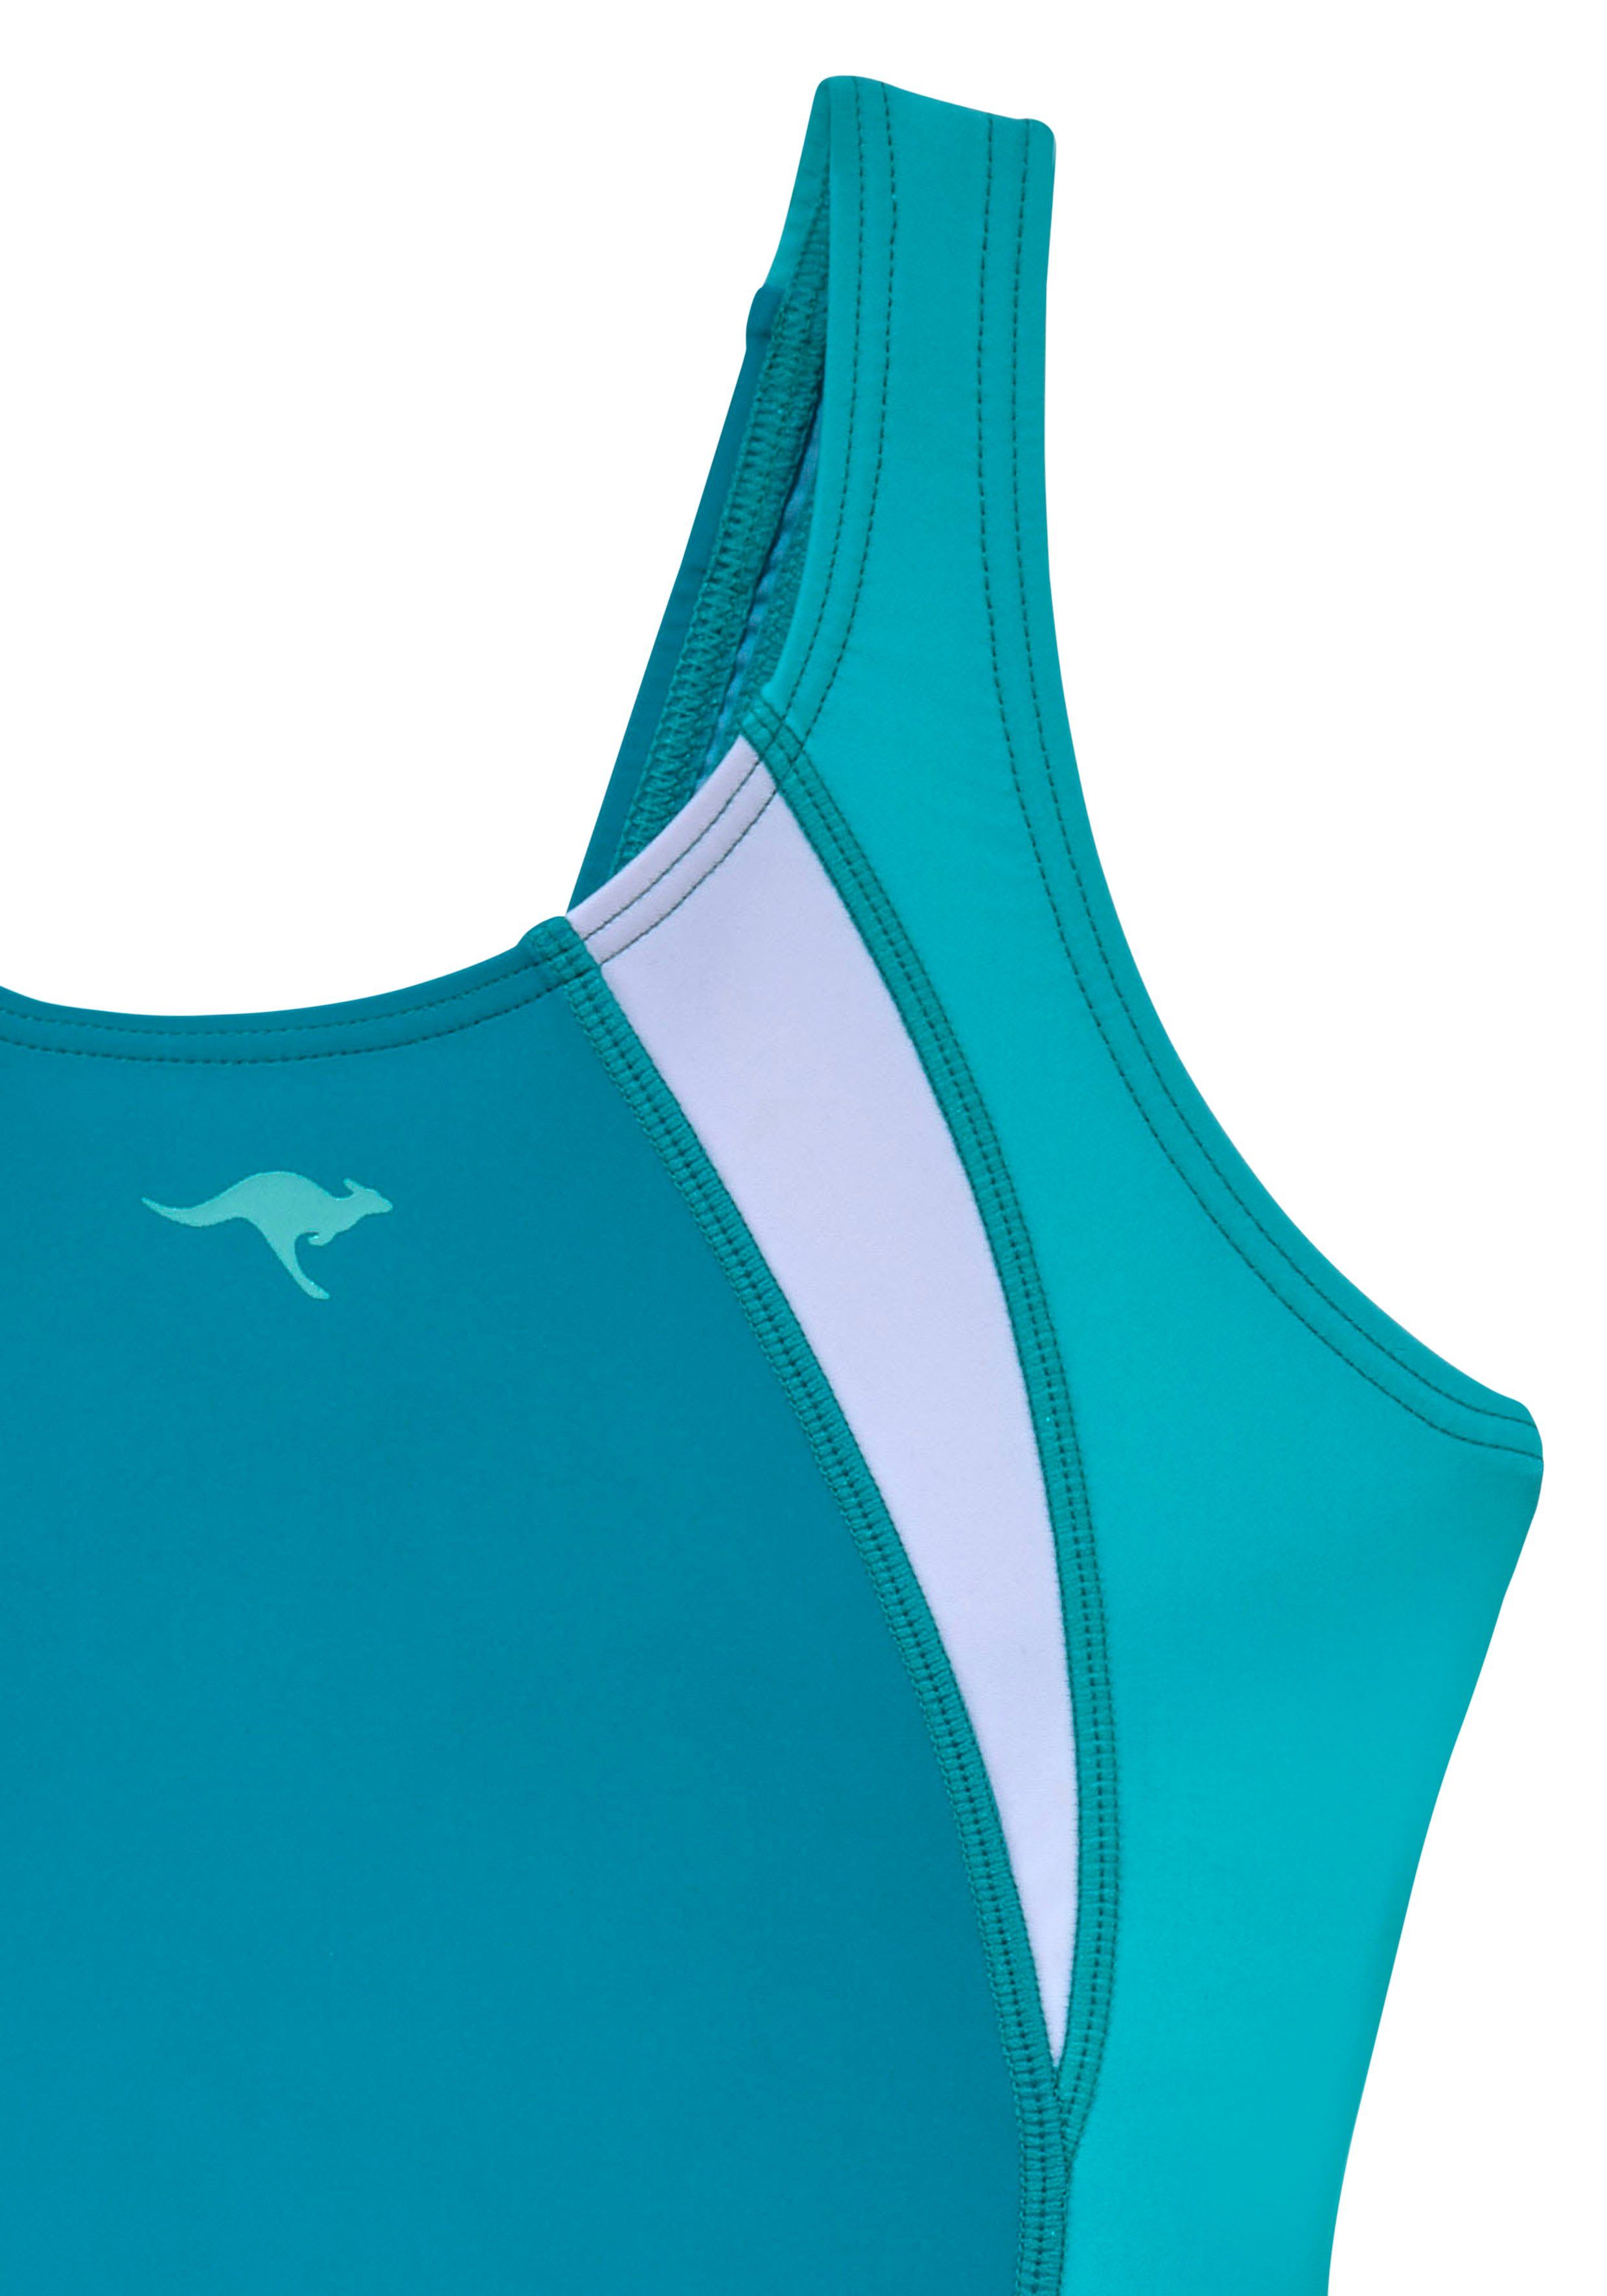 Farbmix sportlichen KangaROOS türkis-blau im Badeanzug